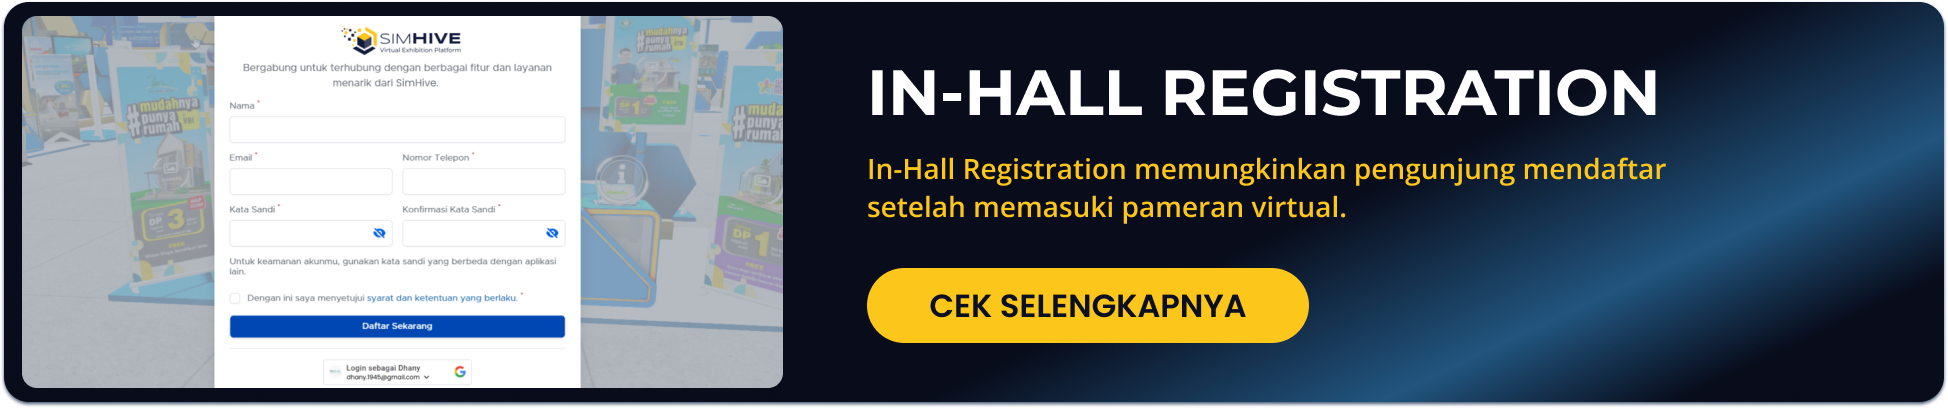 IN-HALL REGISTRATION